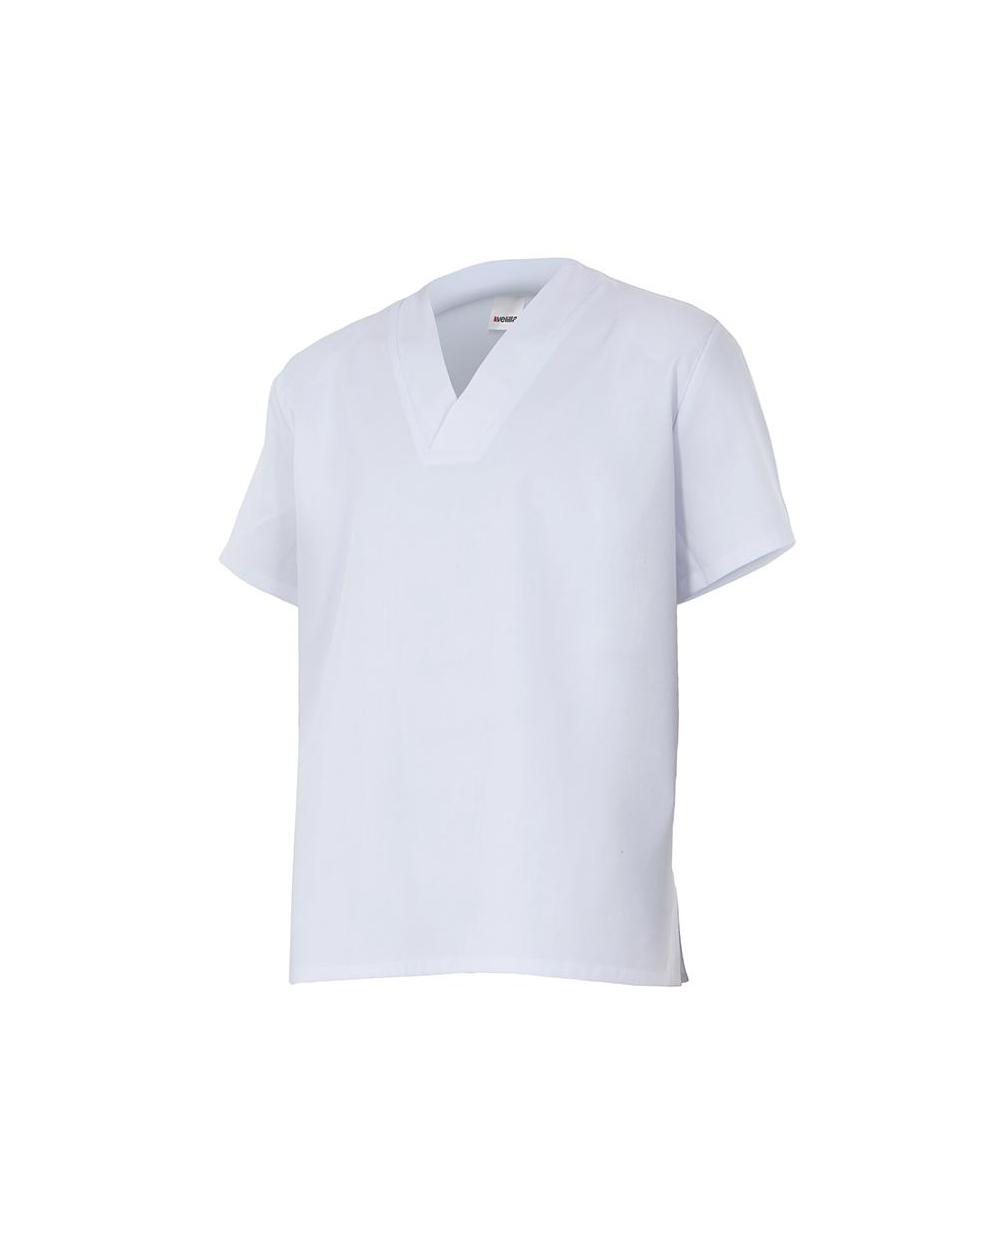 Comprar camisola manga corta industria alimentaria serie 255201 online barato Blanco